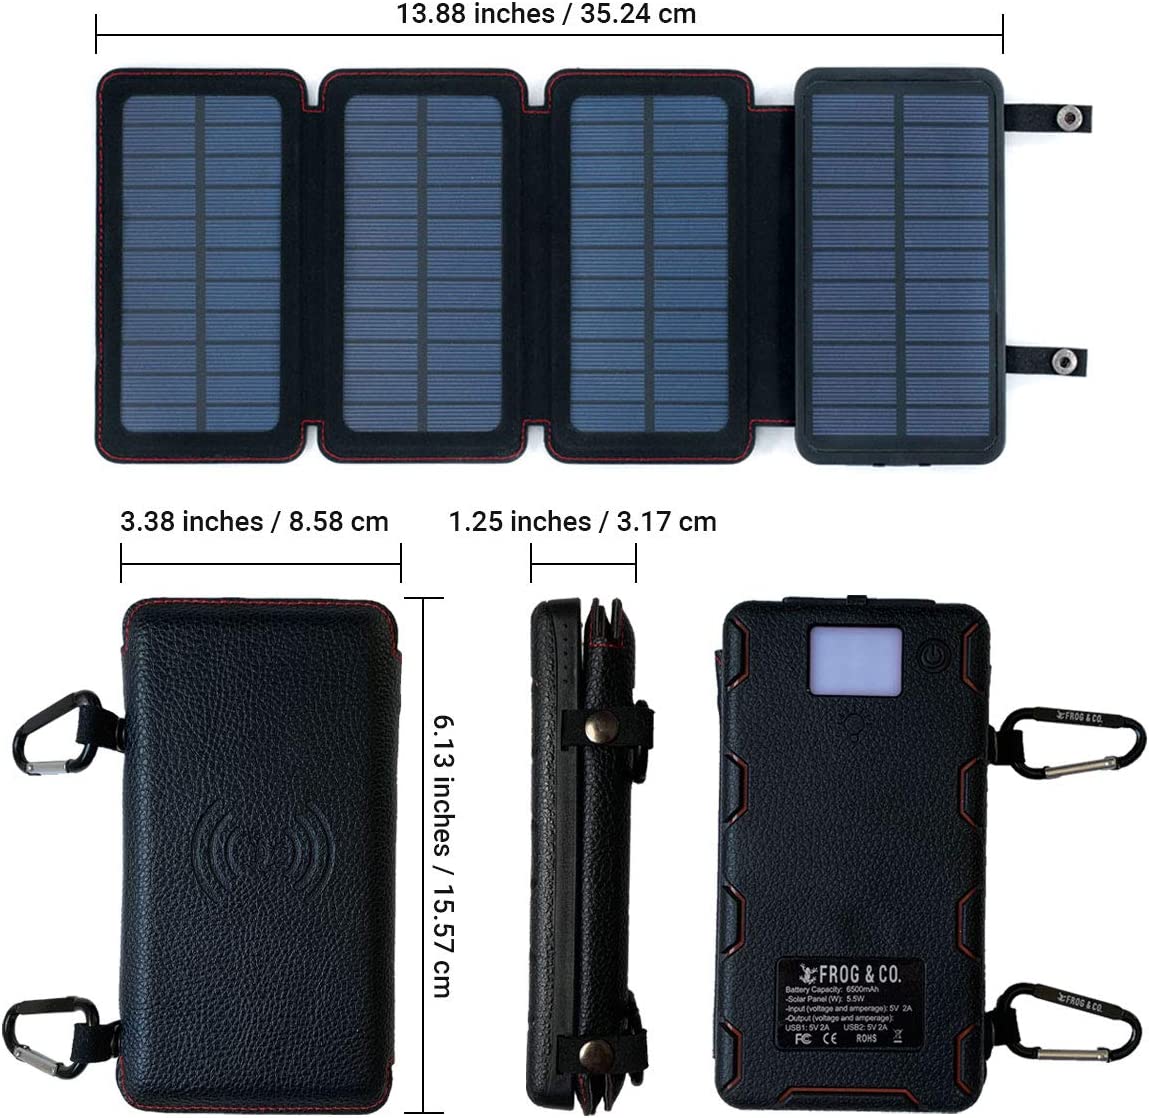 Survival Frog QuadraPro Solar Charger Power Bank - 5.5W 4-Panel Portable...